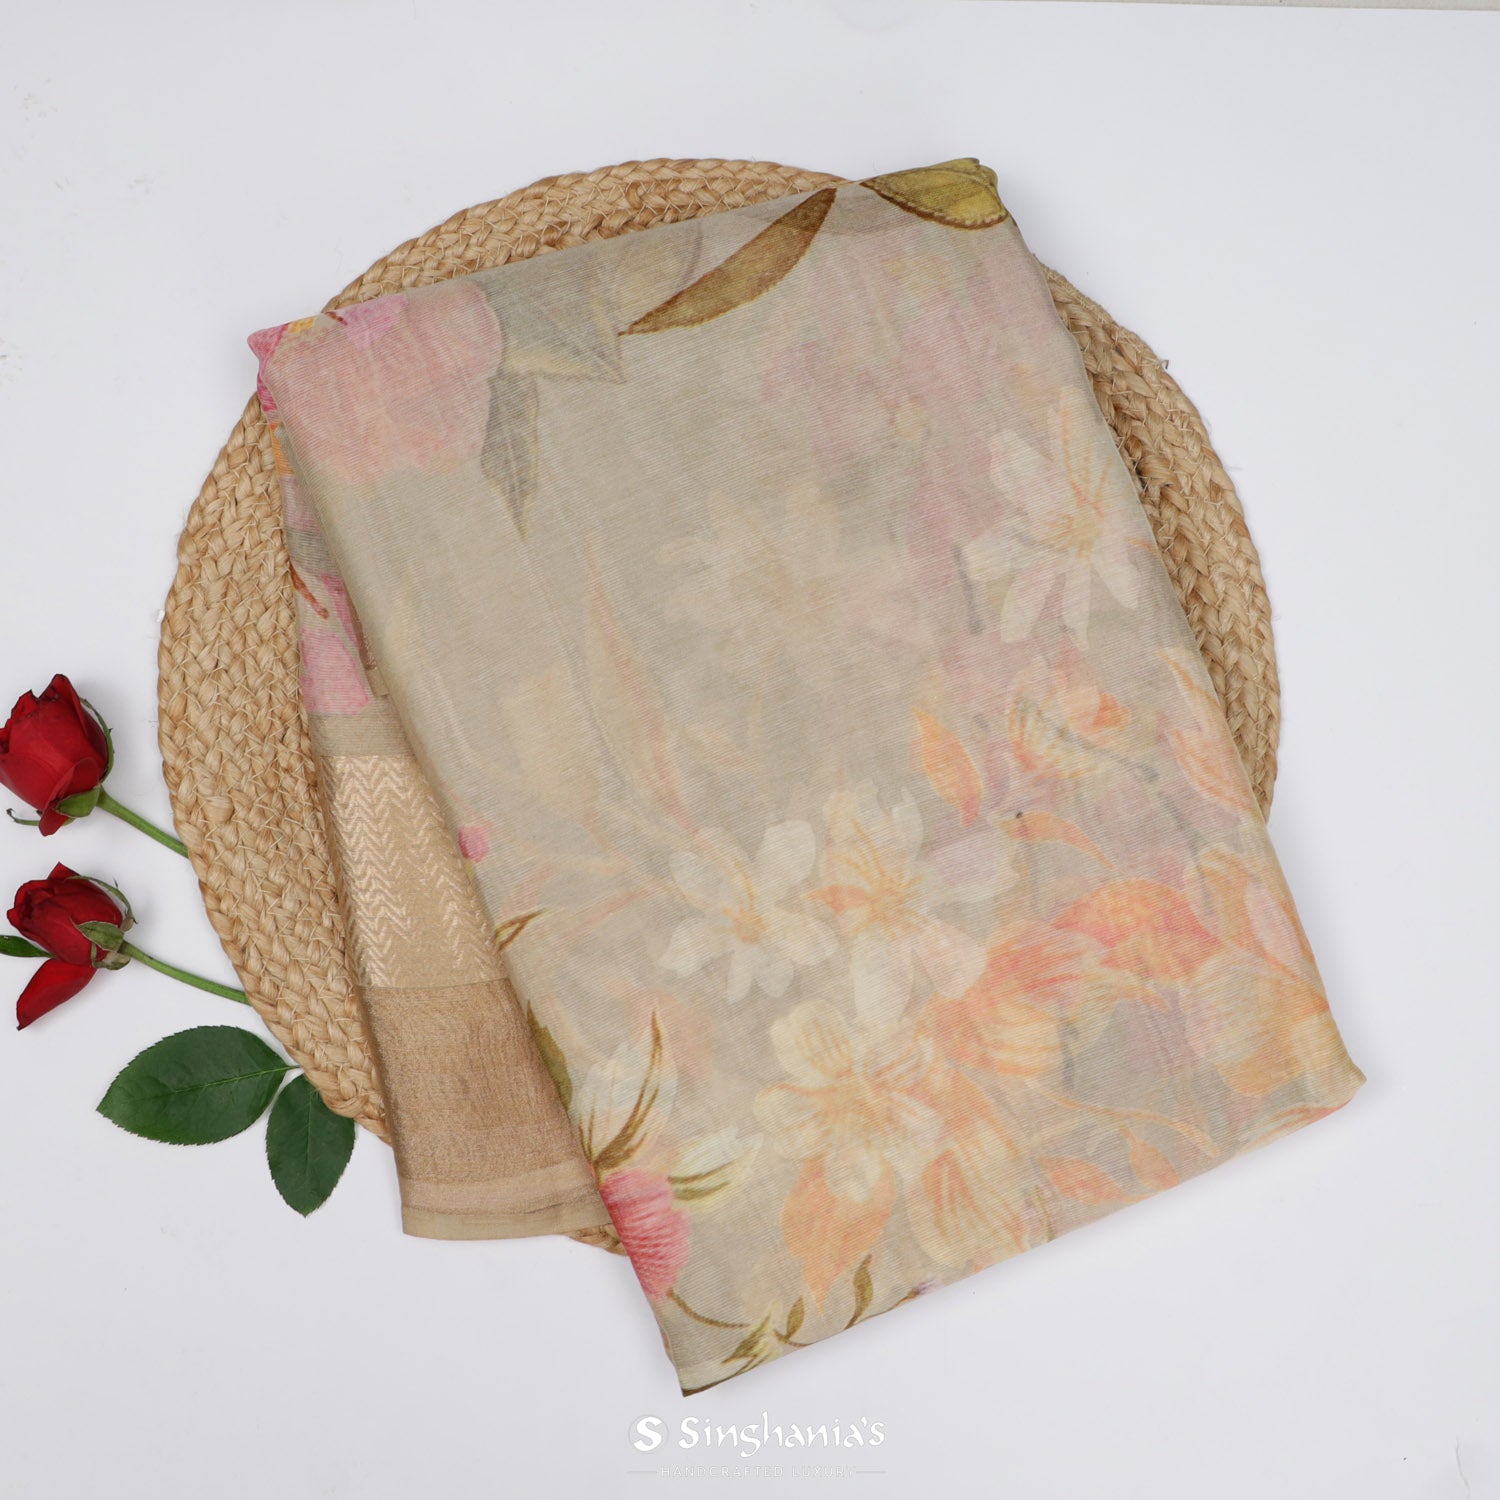 Beige Printed Maheshwari Saree With Floral Pattern